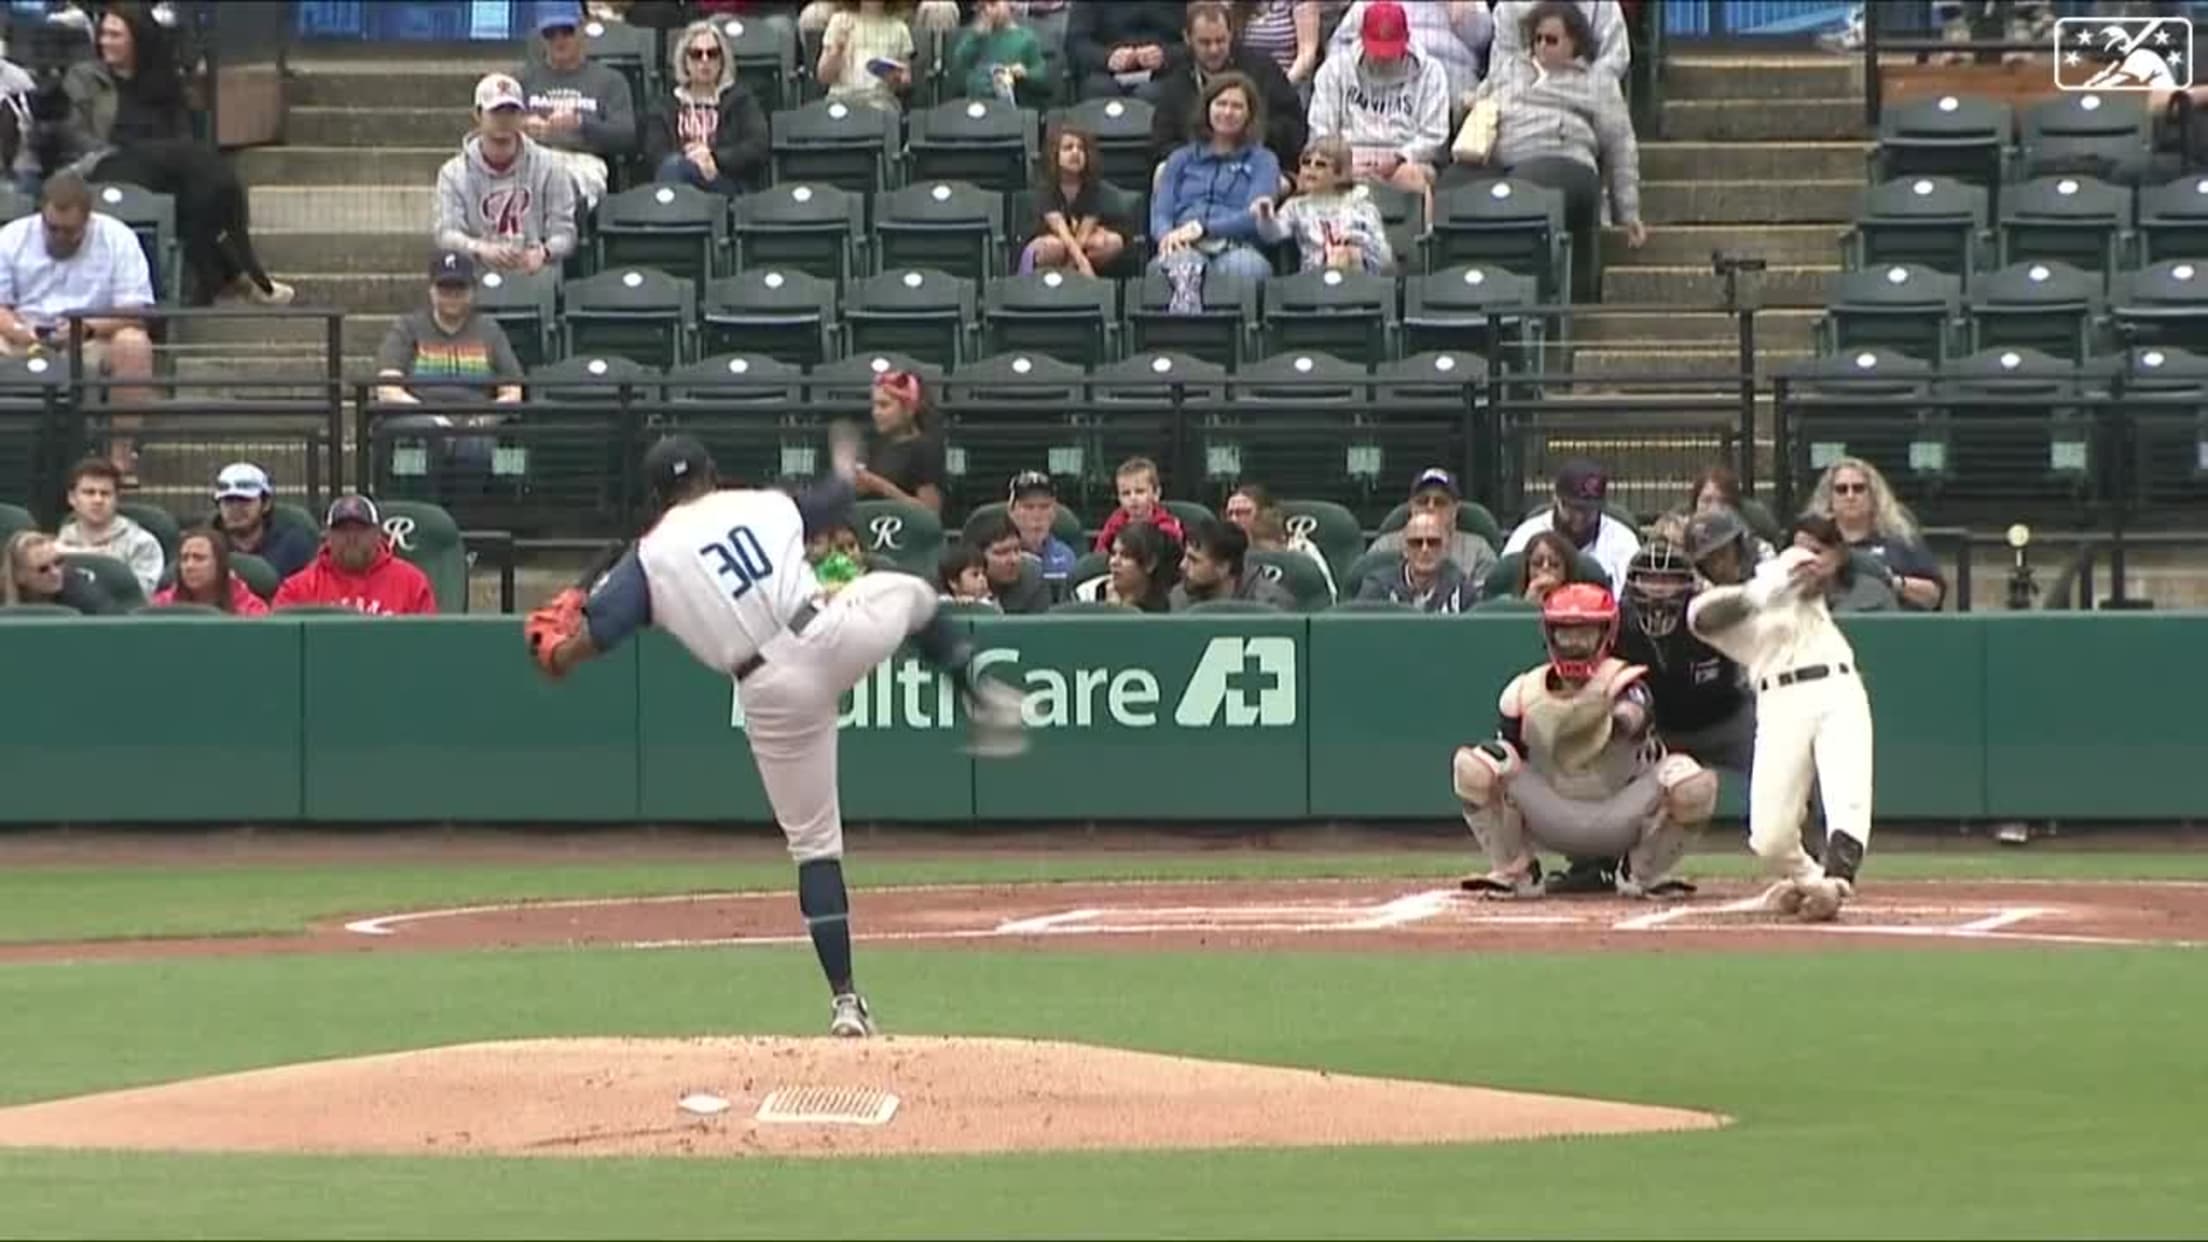 Ryan Bliss' solo home run